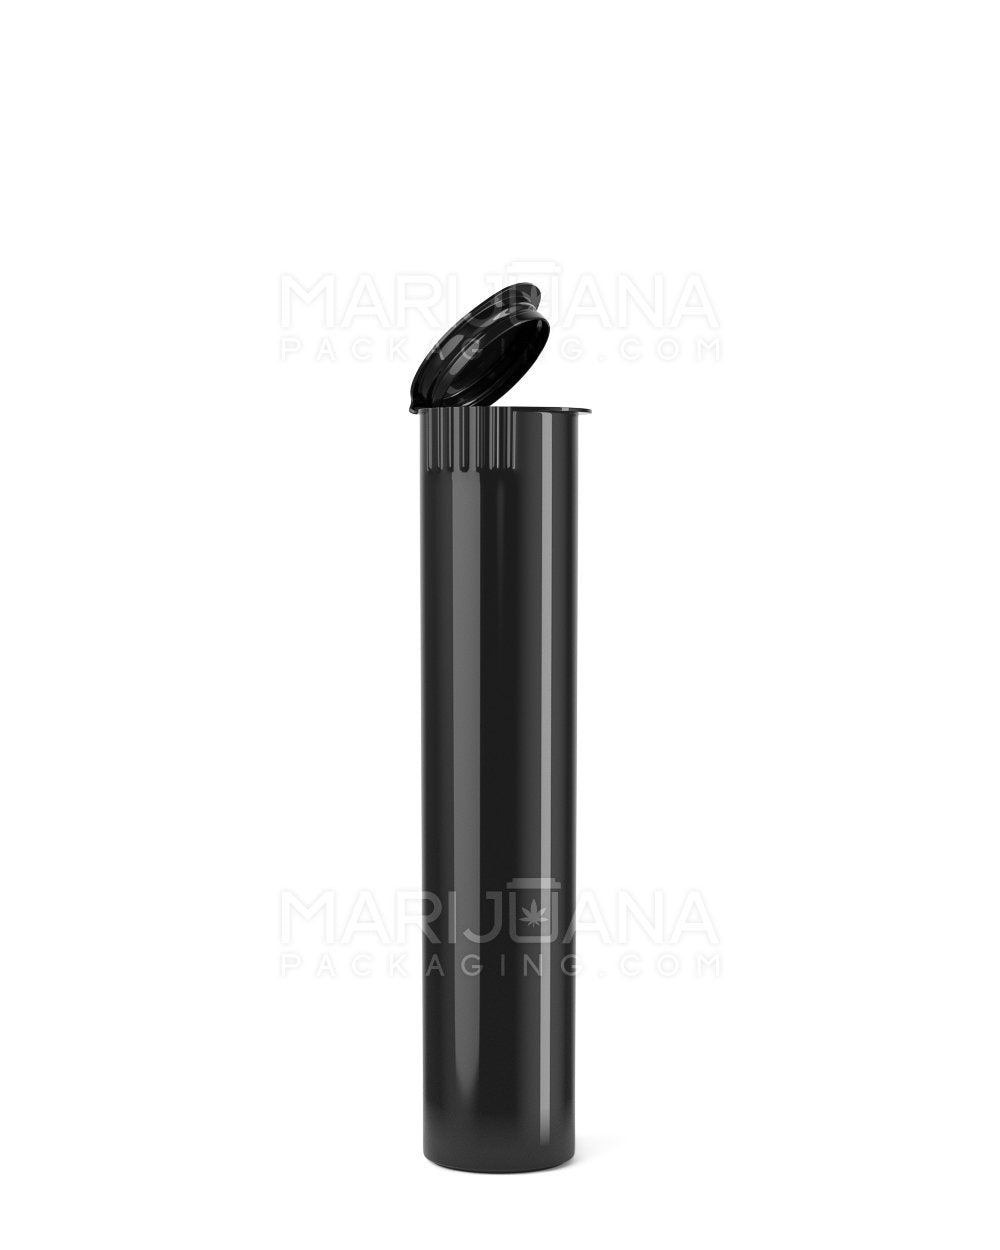 Child Resistant Pop Top Opaque Plastic Pre-Roll Tubes | 90mm - Black | Sample - 1